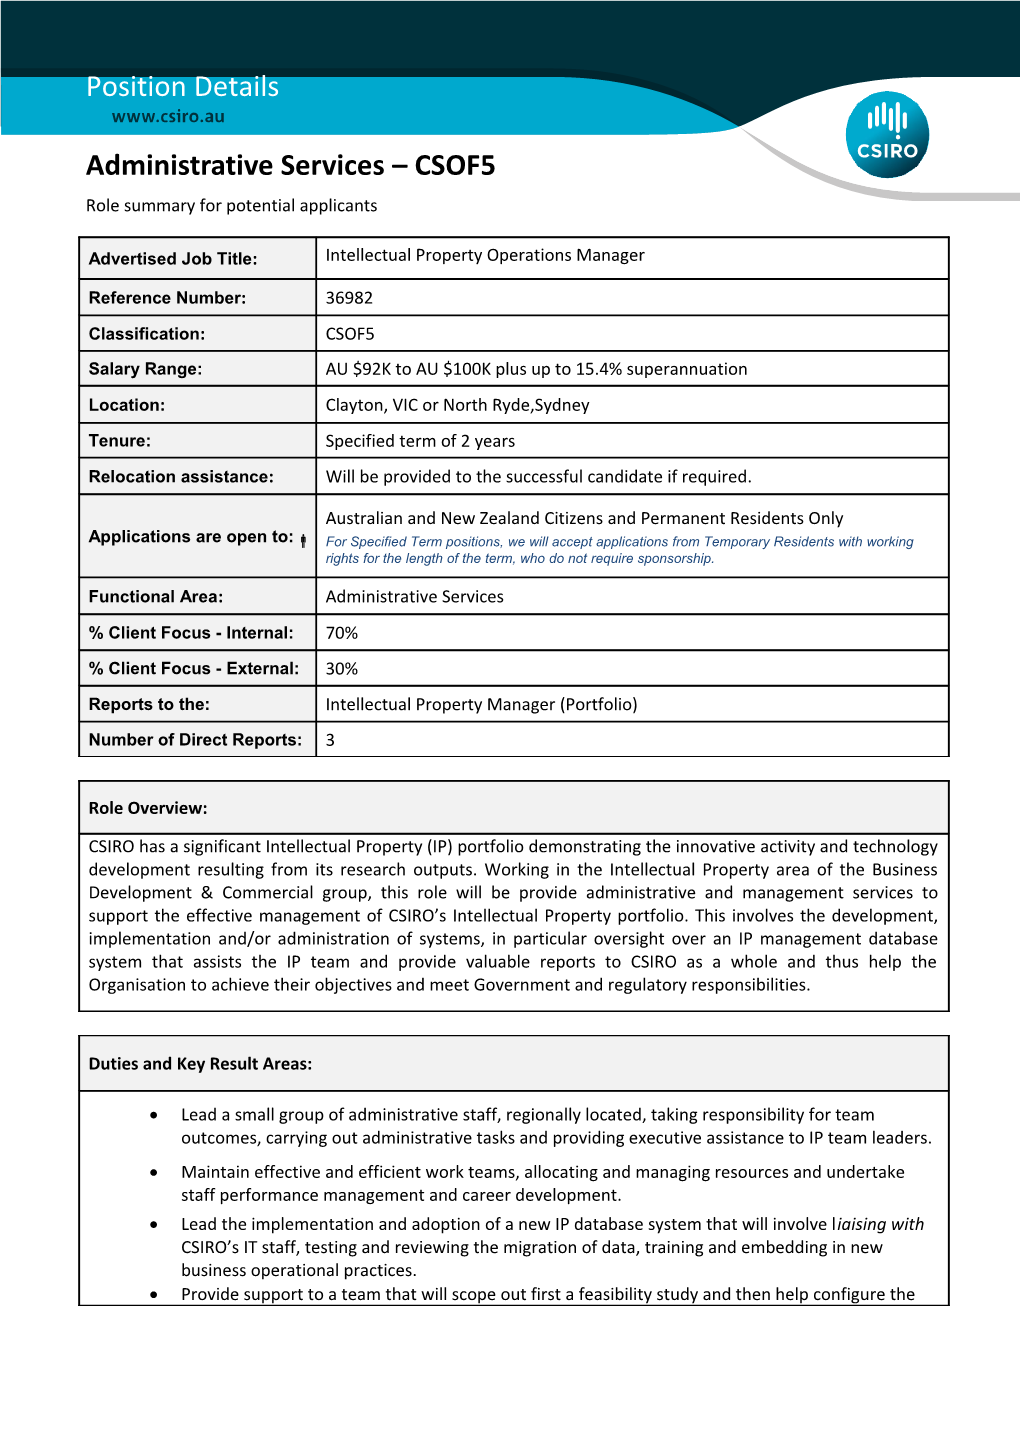 Position Details - Administrative Services - CSOF6